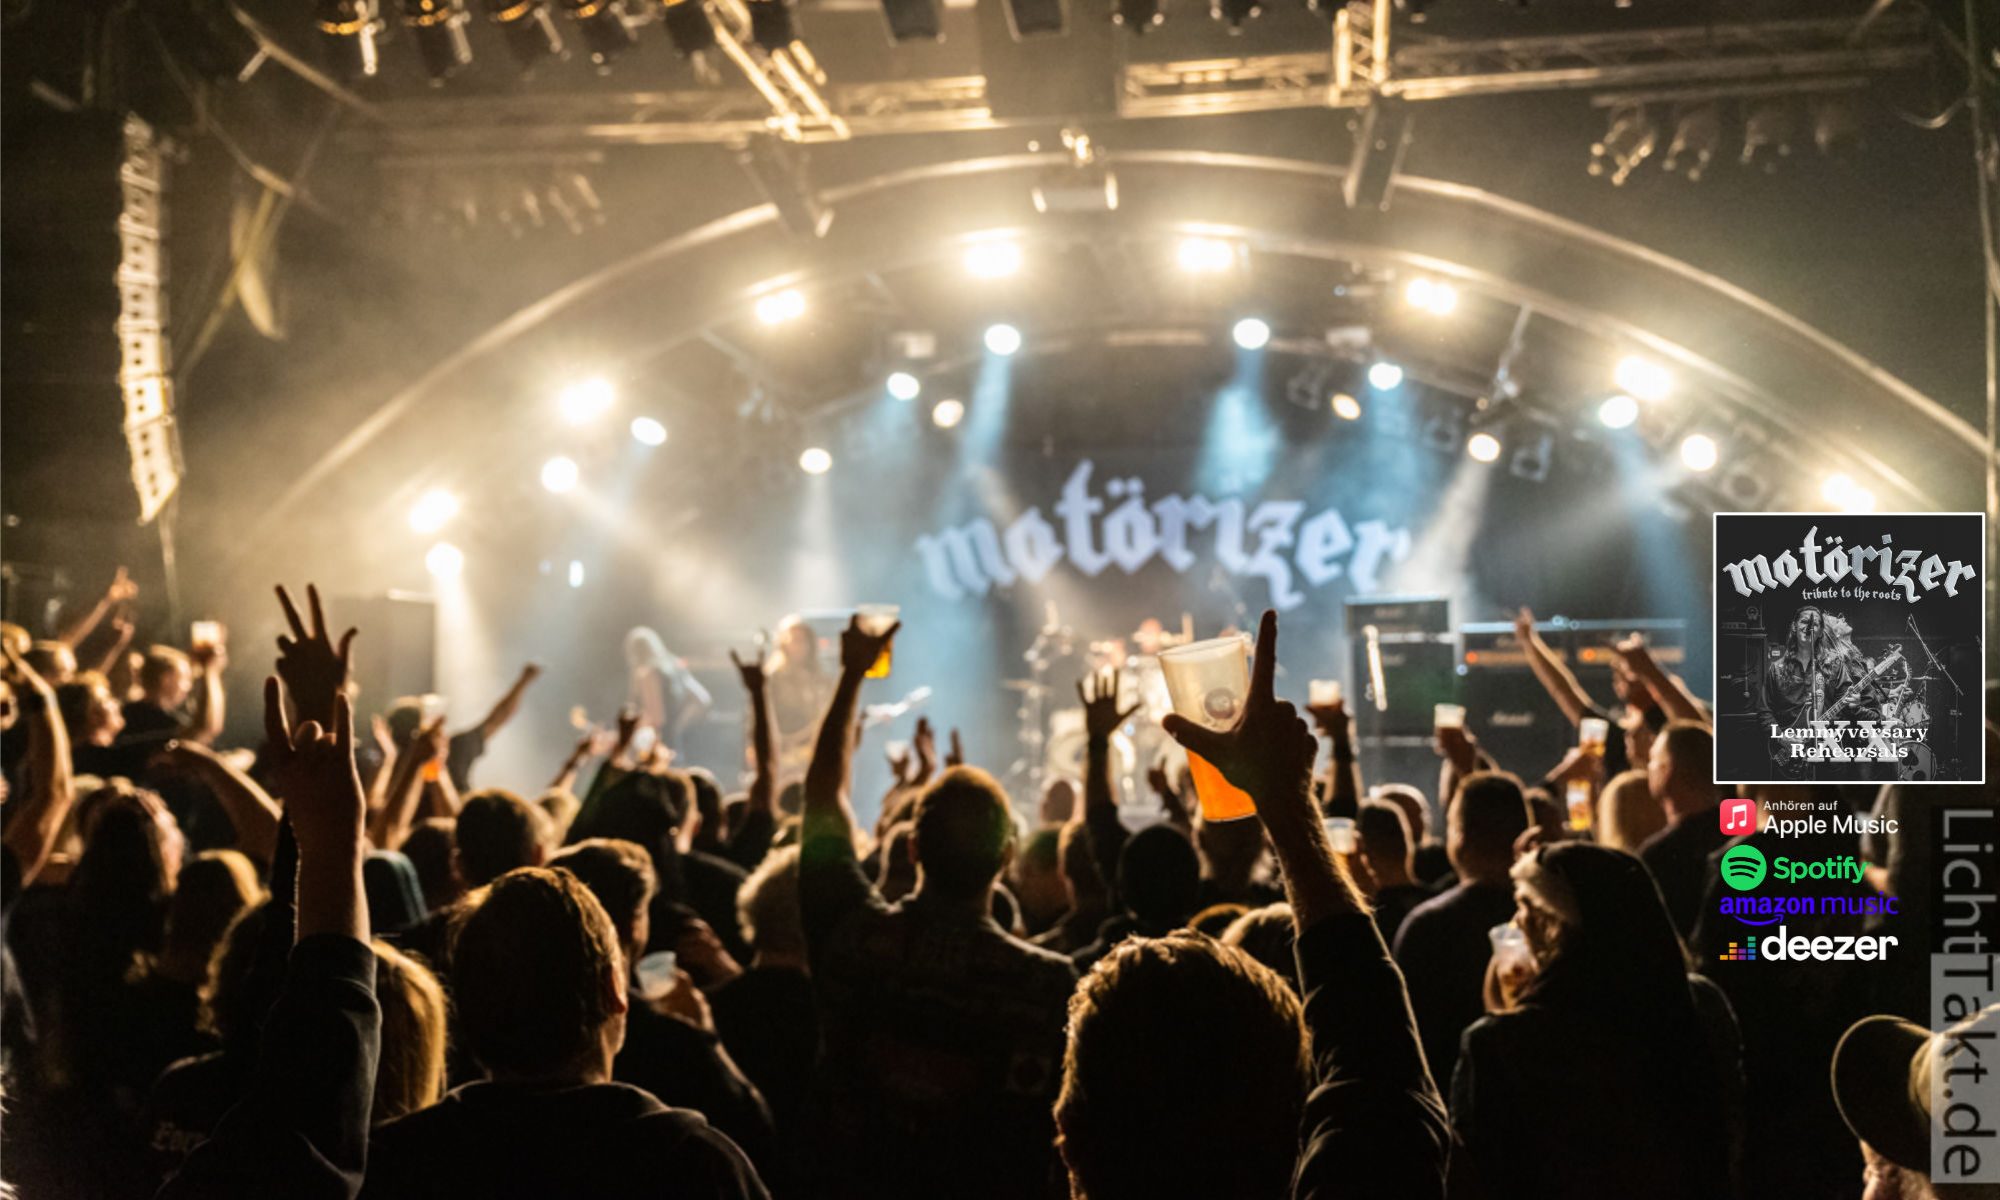 Motörizer - Motörhead Tribute Band